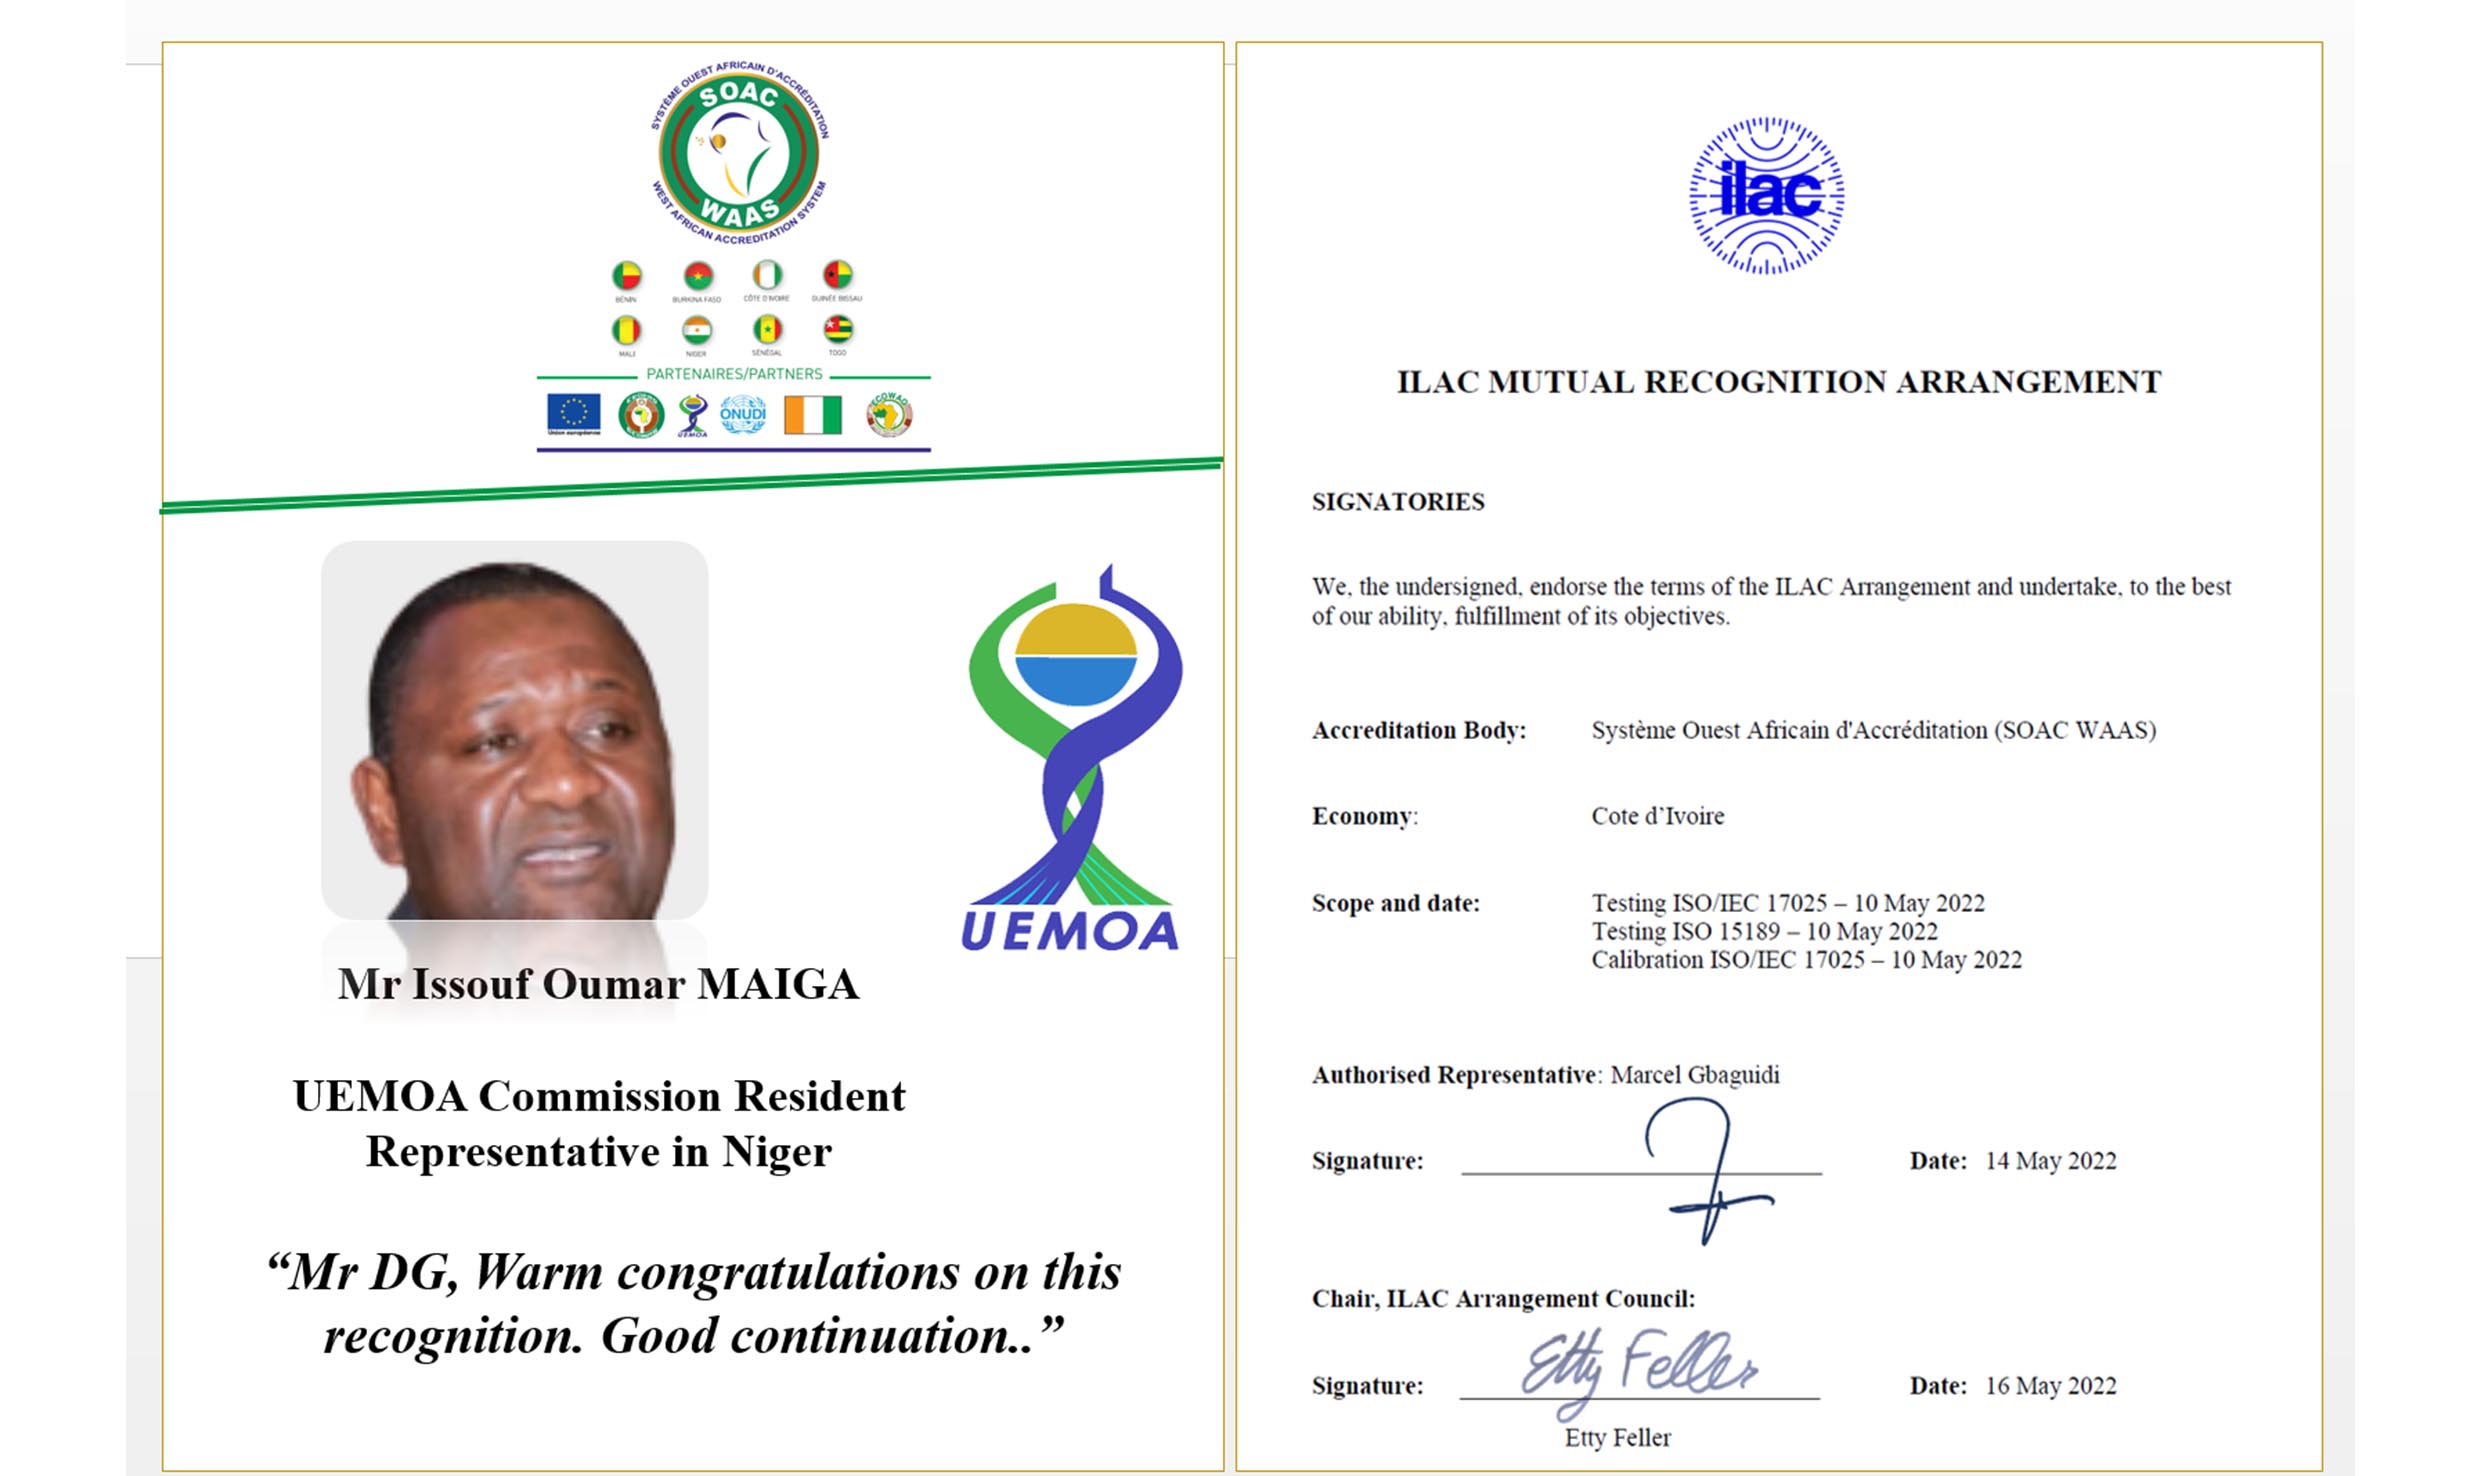 Mr Issouf Oumar MAIGA, UEMOA Commission Resident Representative, Niger